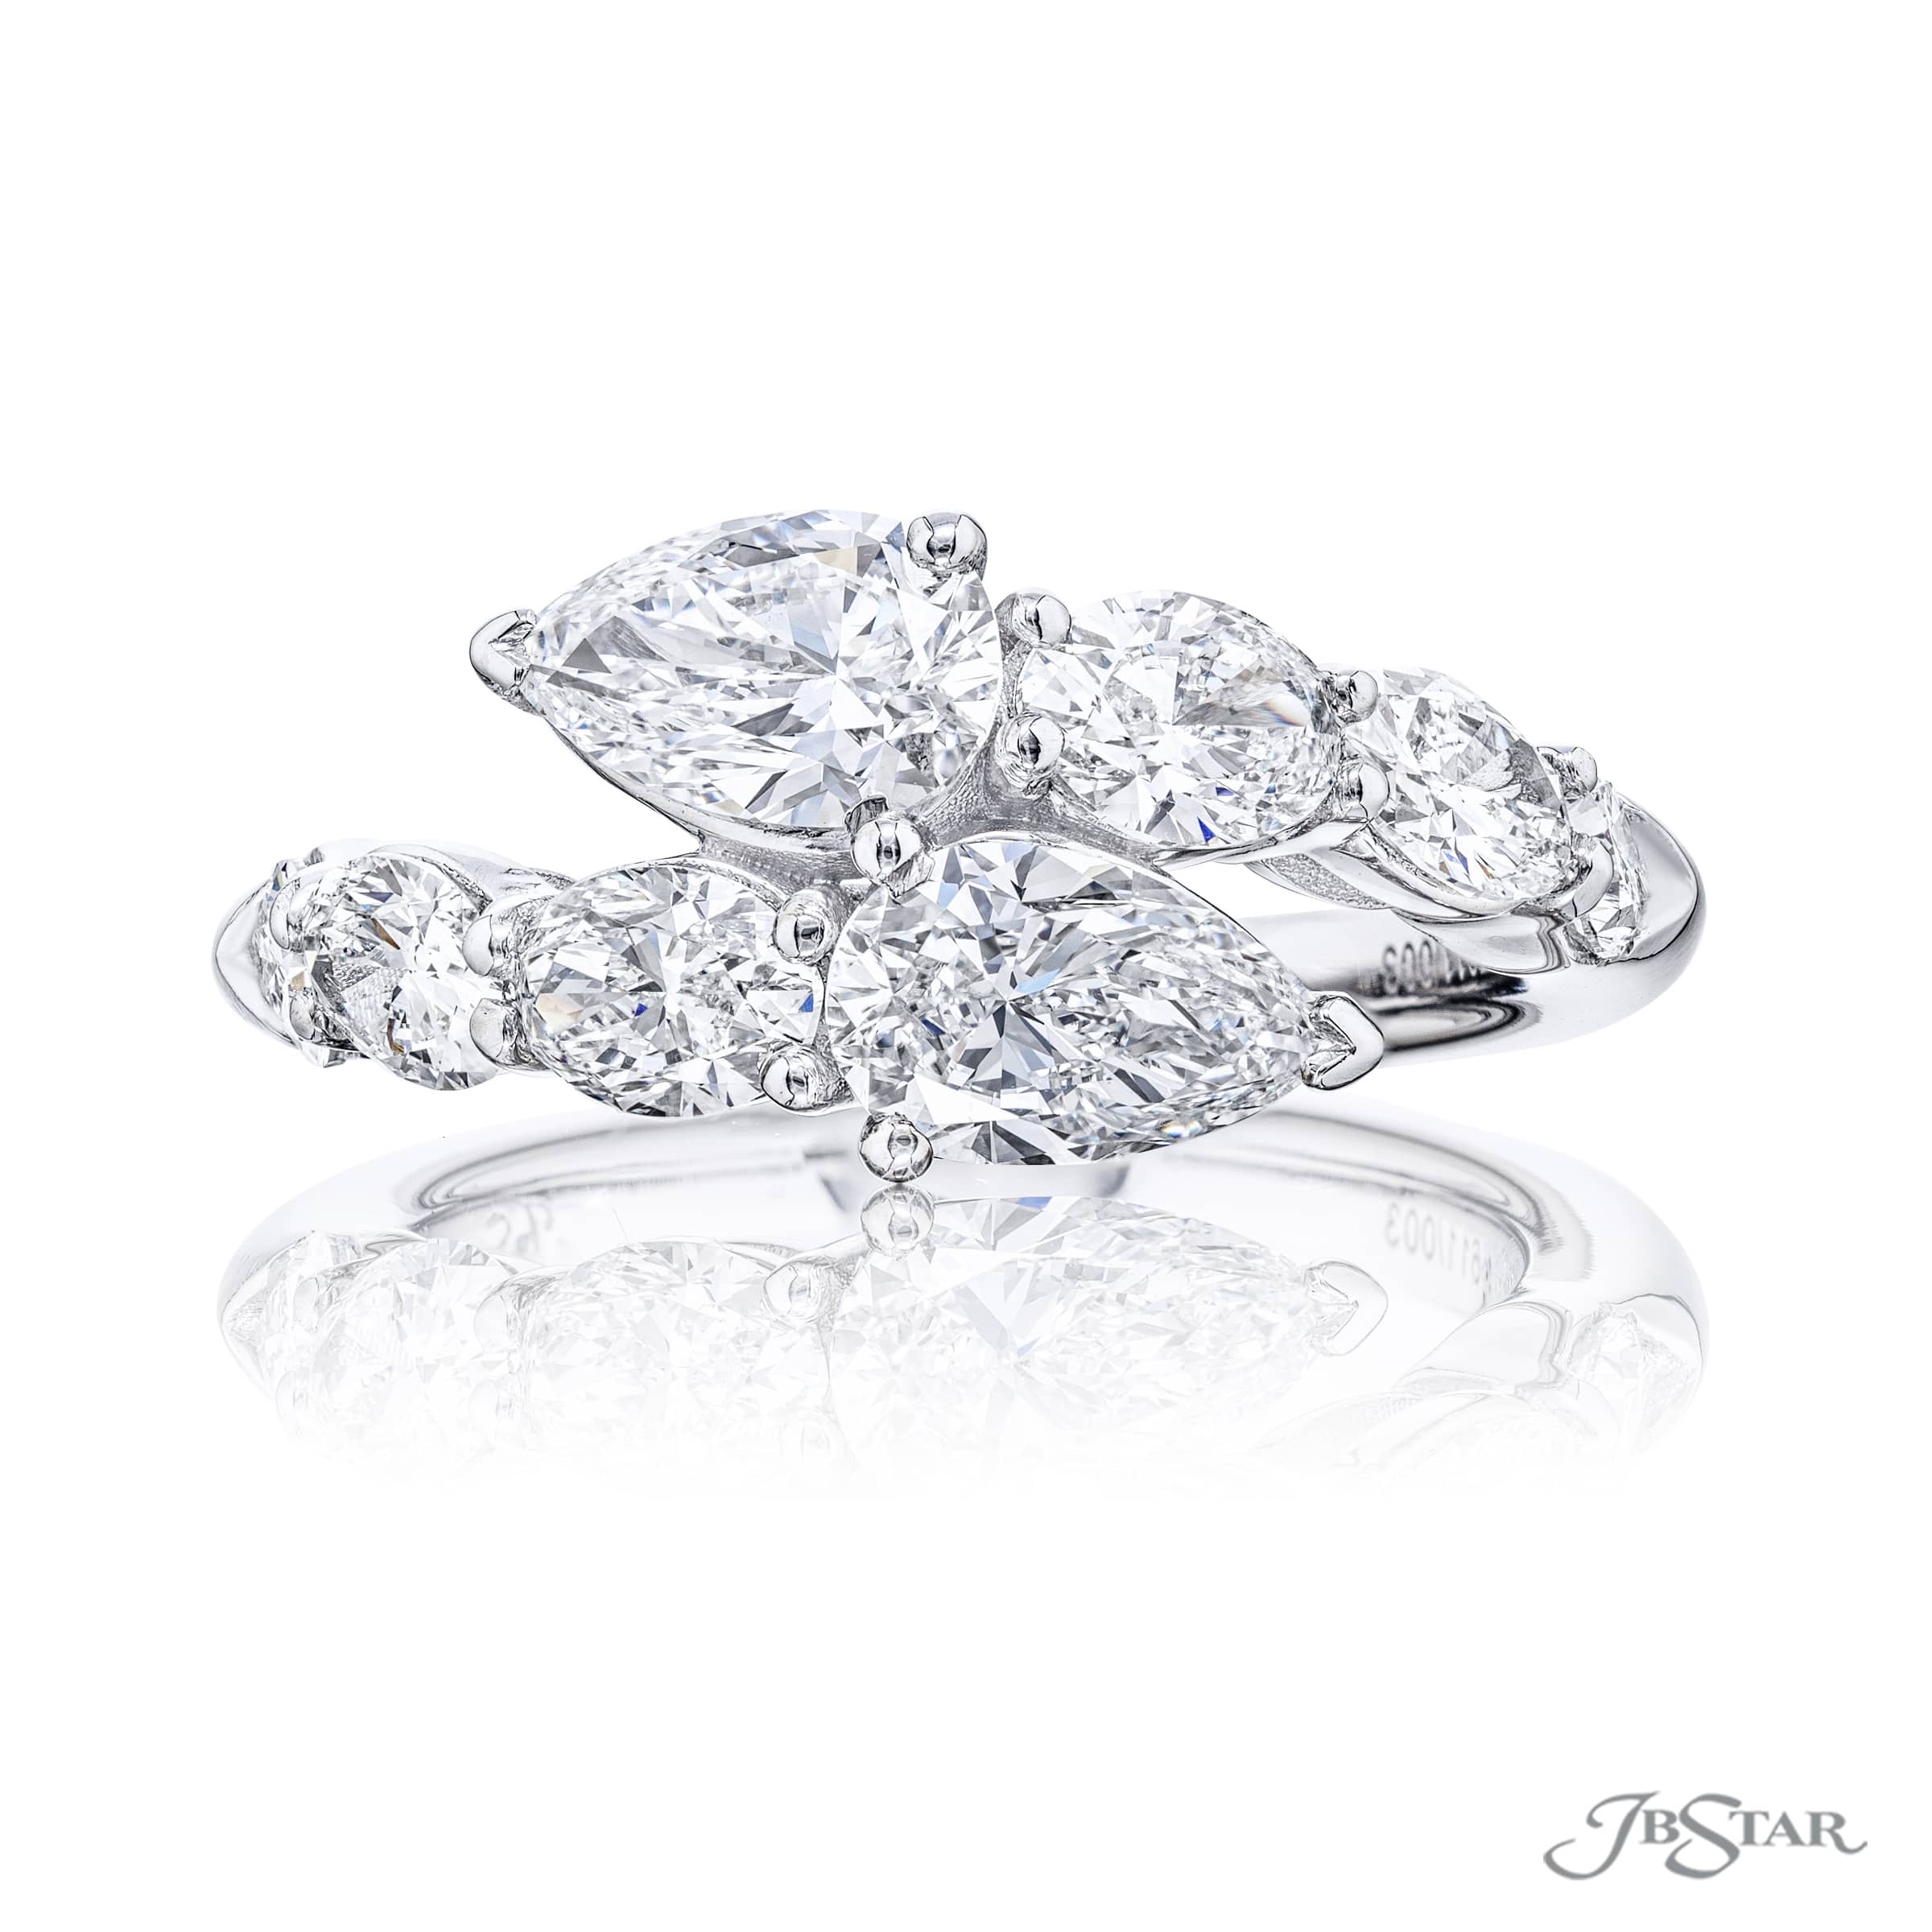 Shop JB Star 4398/187 Engagement rings